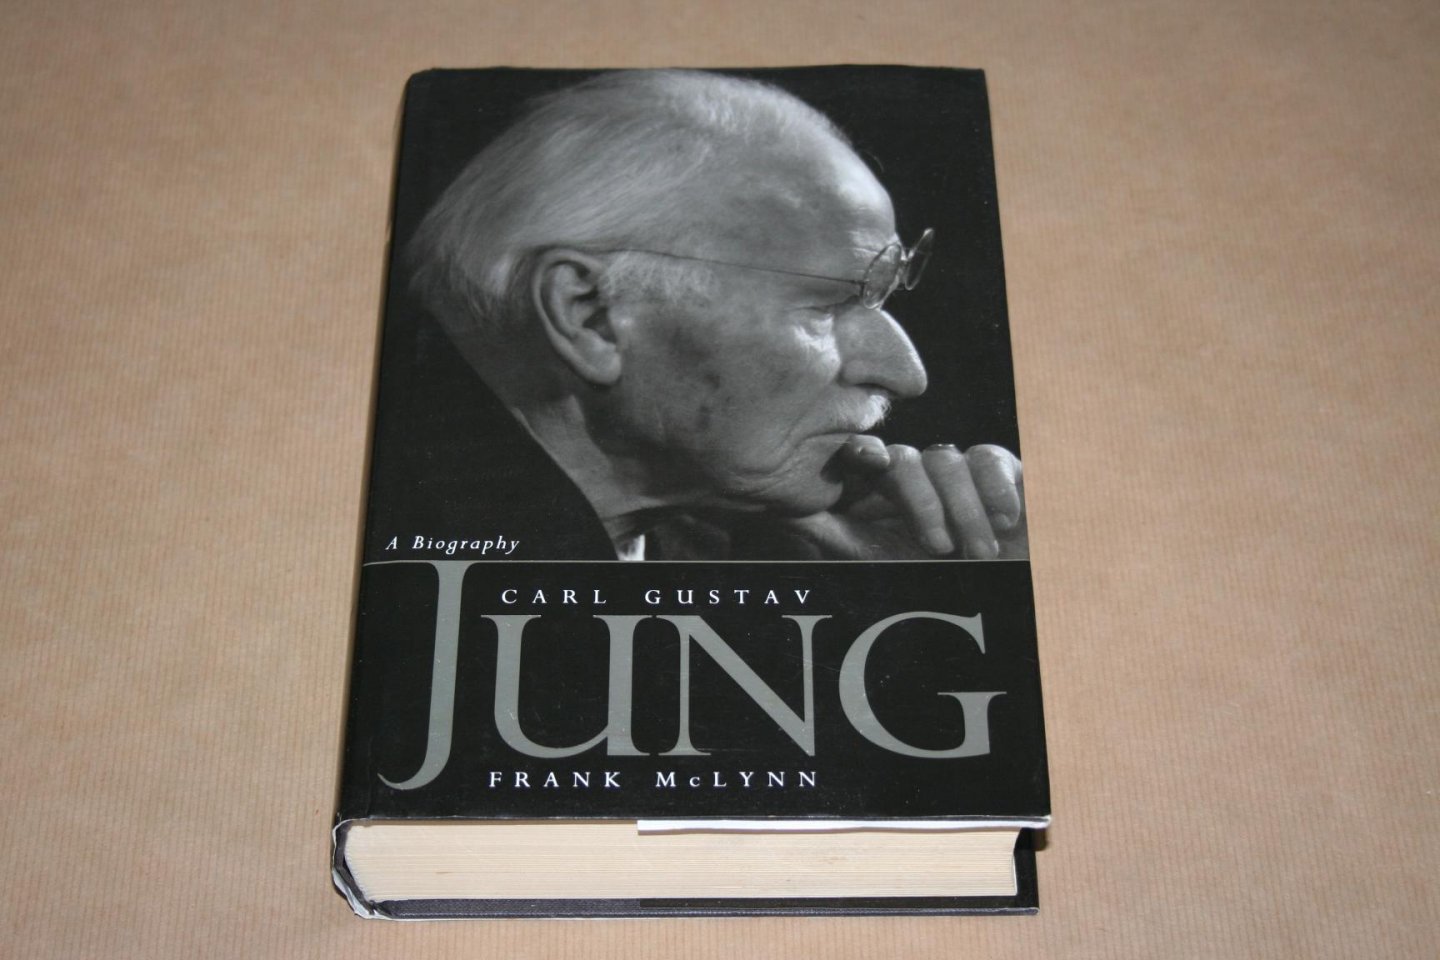 Frank McLynn - Carl Gustav Jung - A Biography